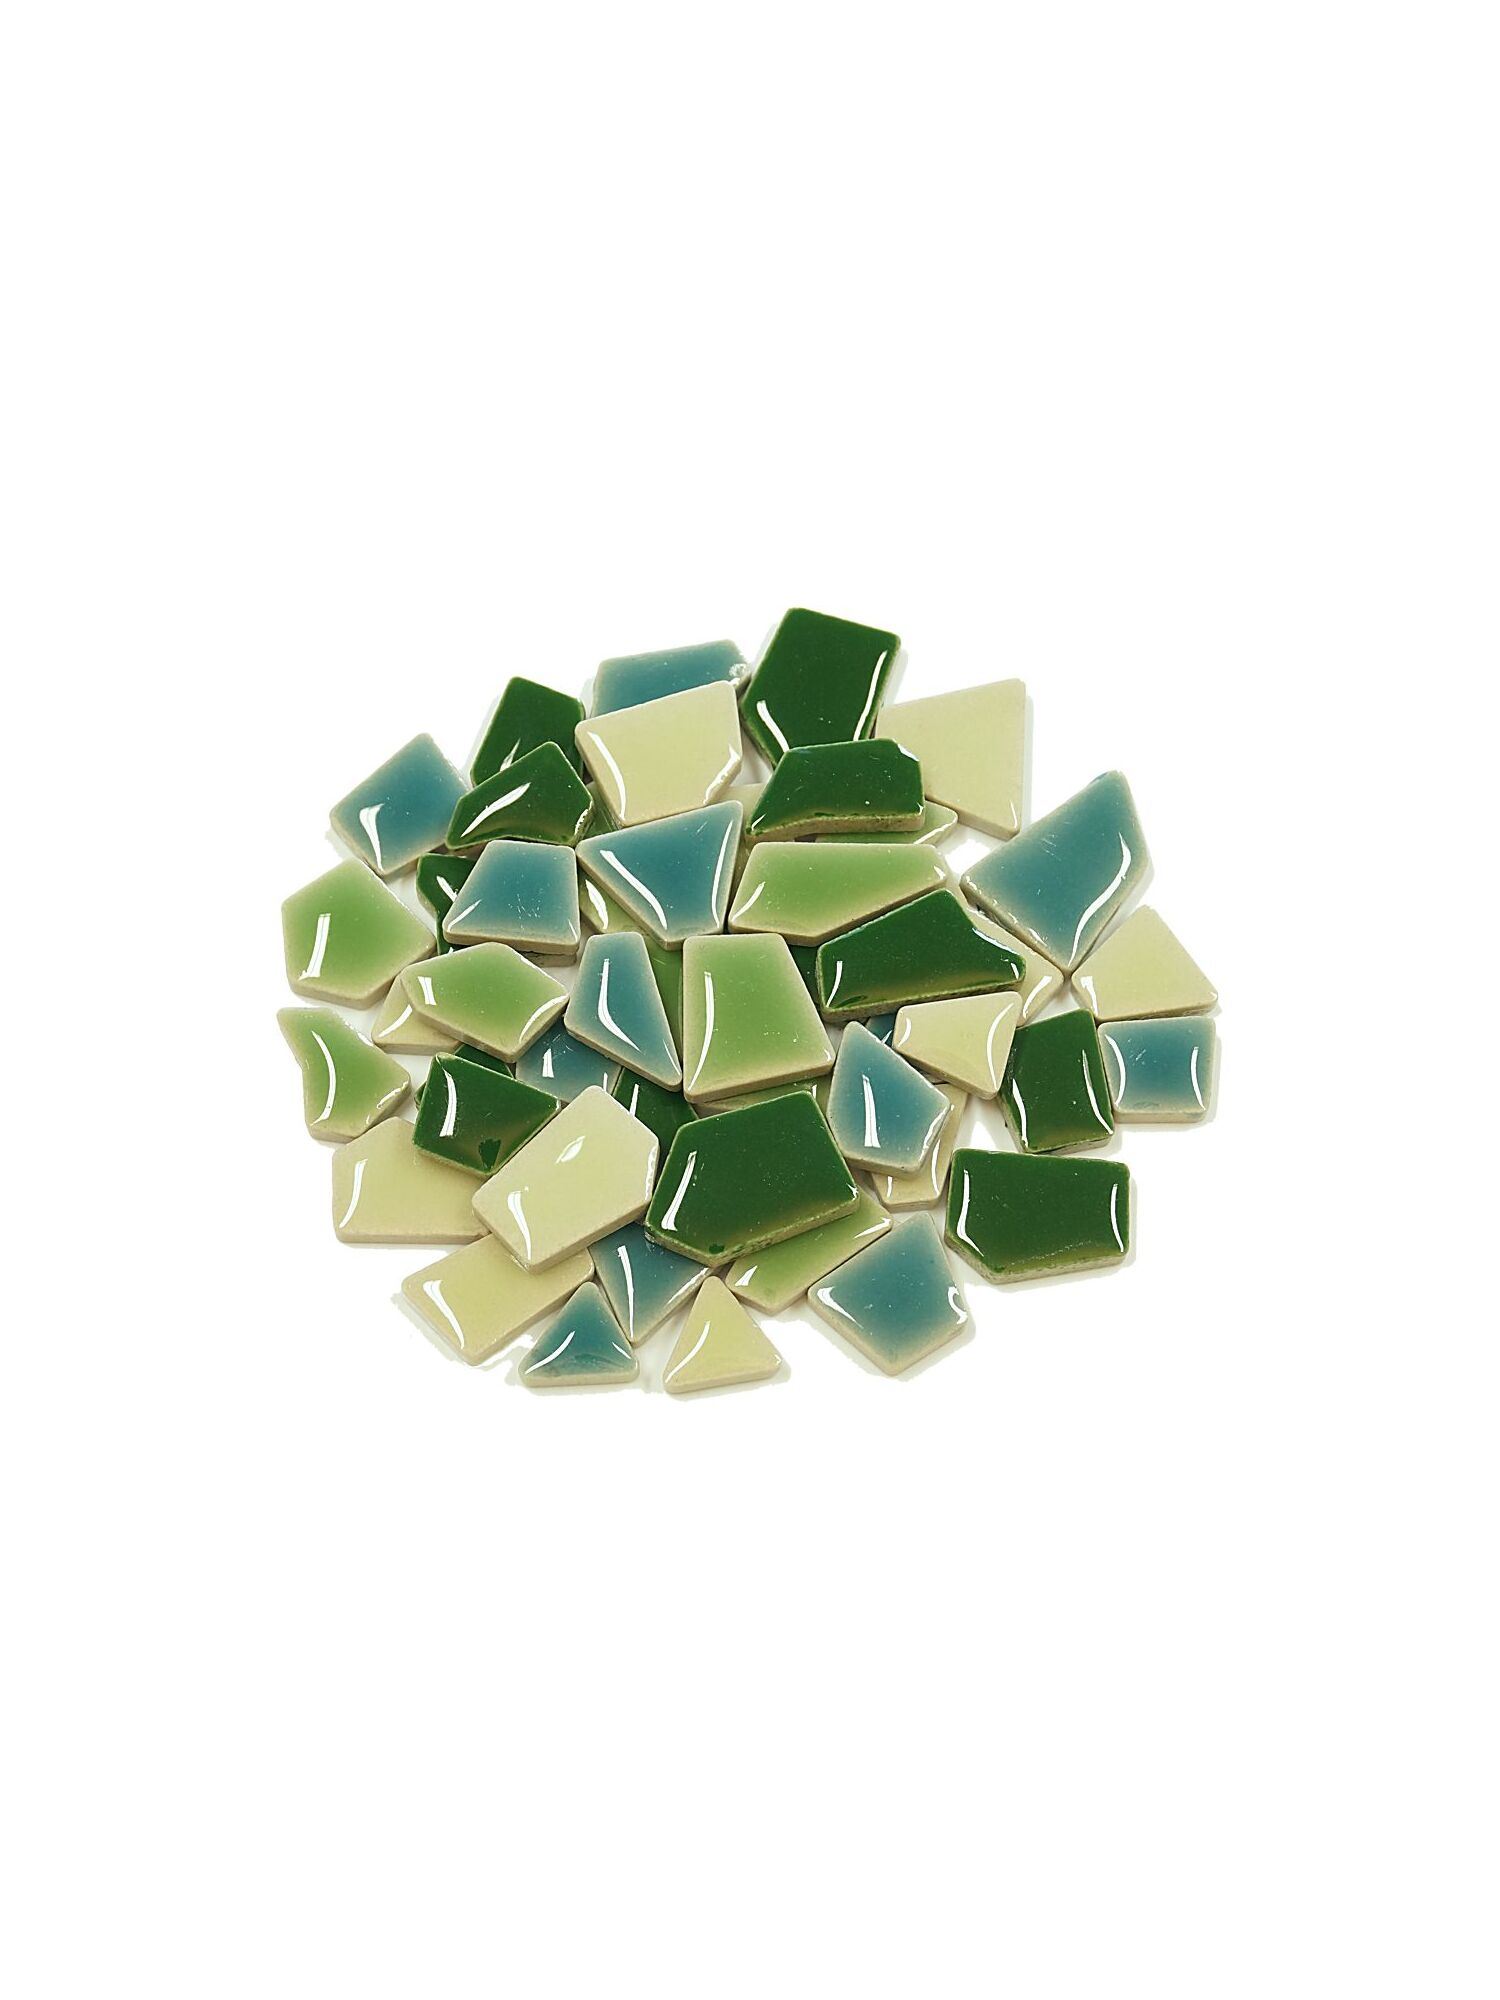 grün Mosaiksteine € 3,99 mix, MINI Keramik Flip